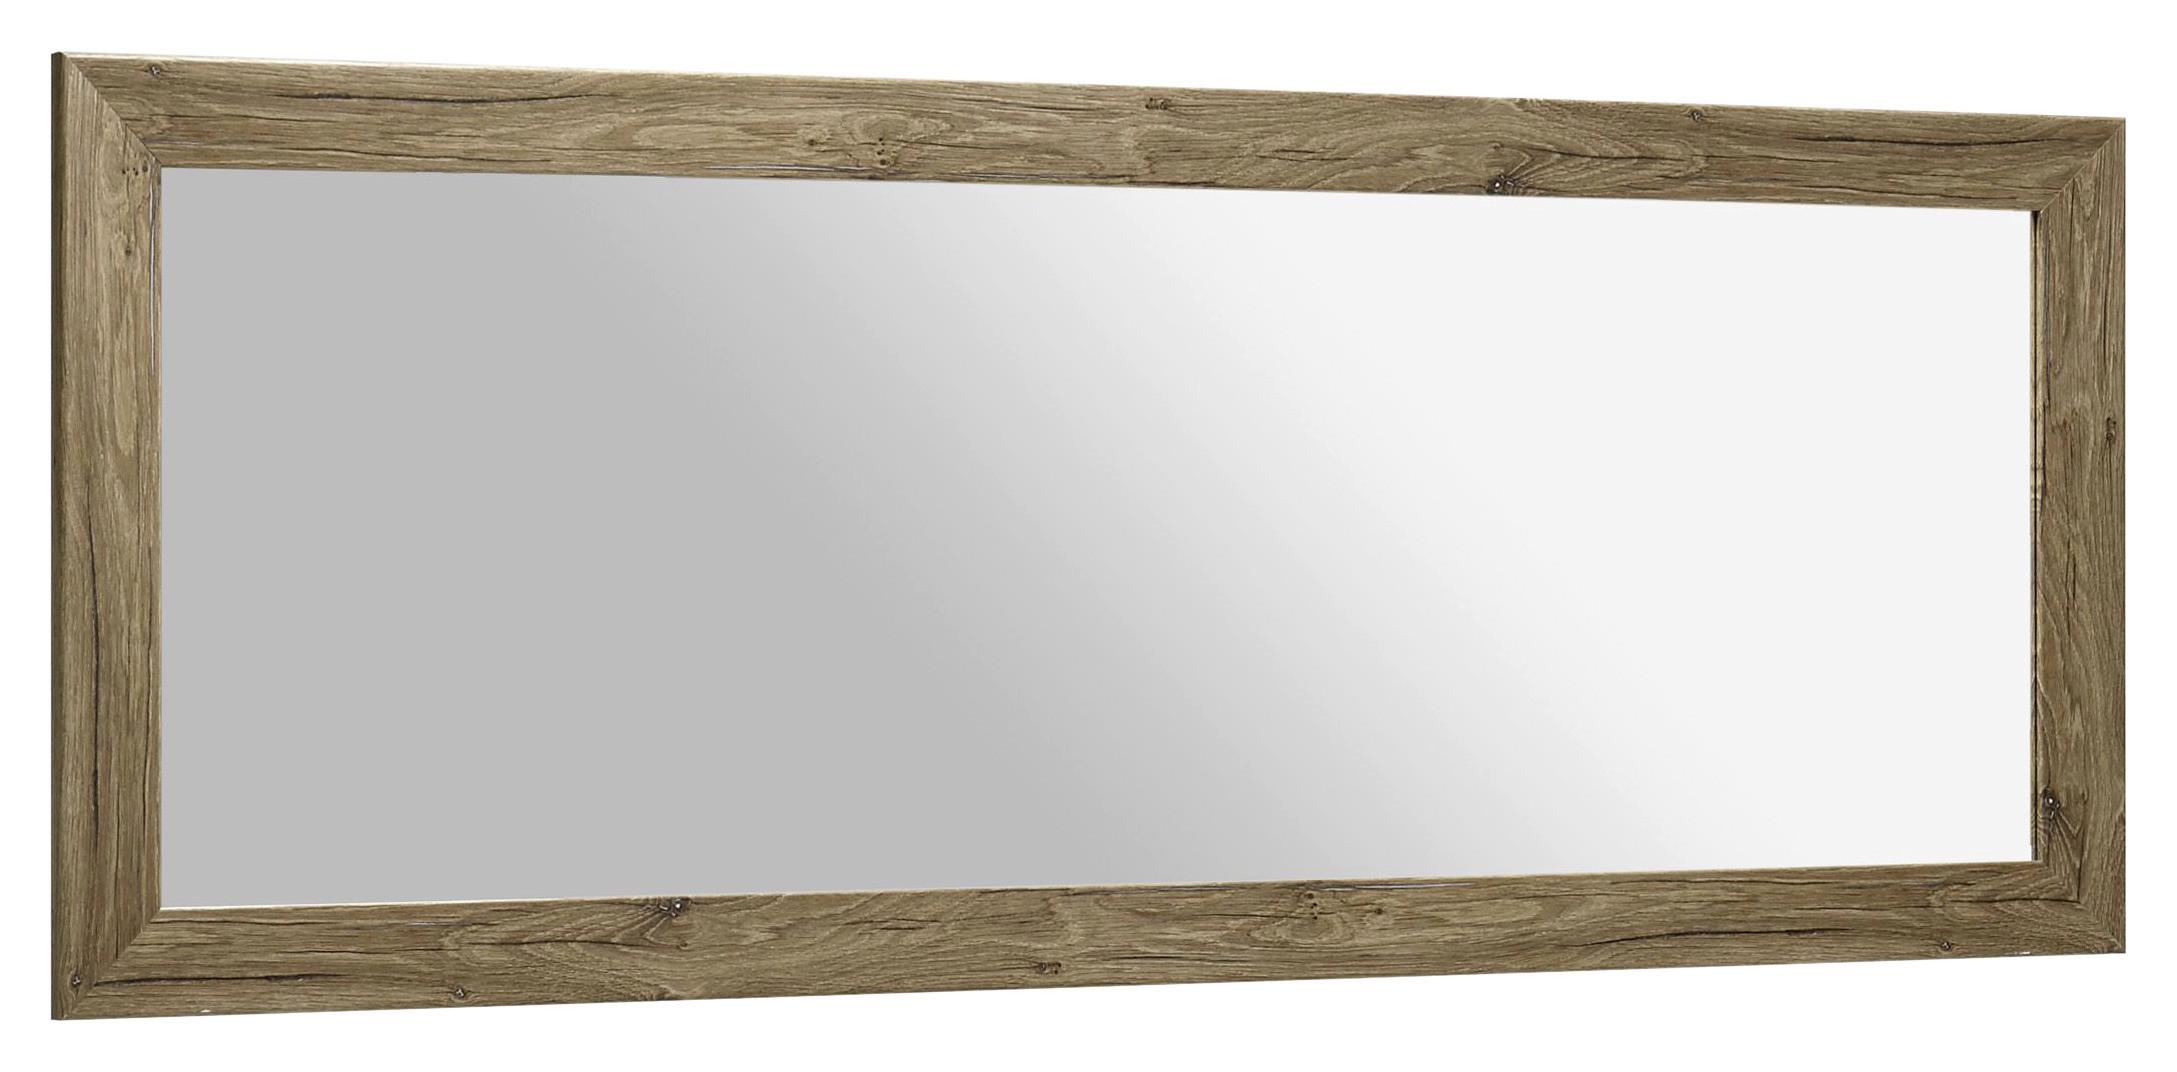 Ogledalo Zidno Neapel - tamno smeđa, Konventionell, staklo/drvni materijal (180/70/25cm) - Modern Living